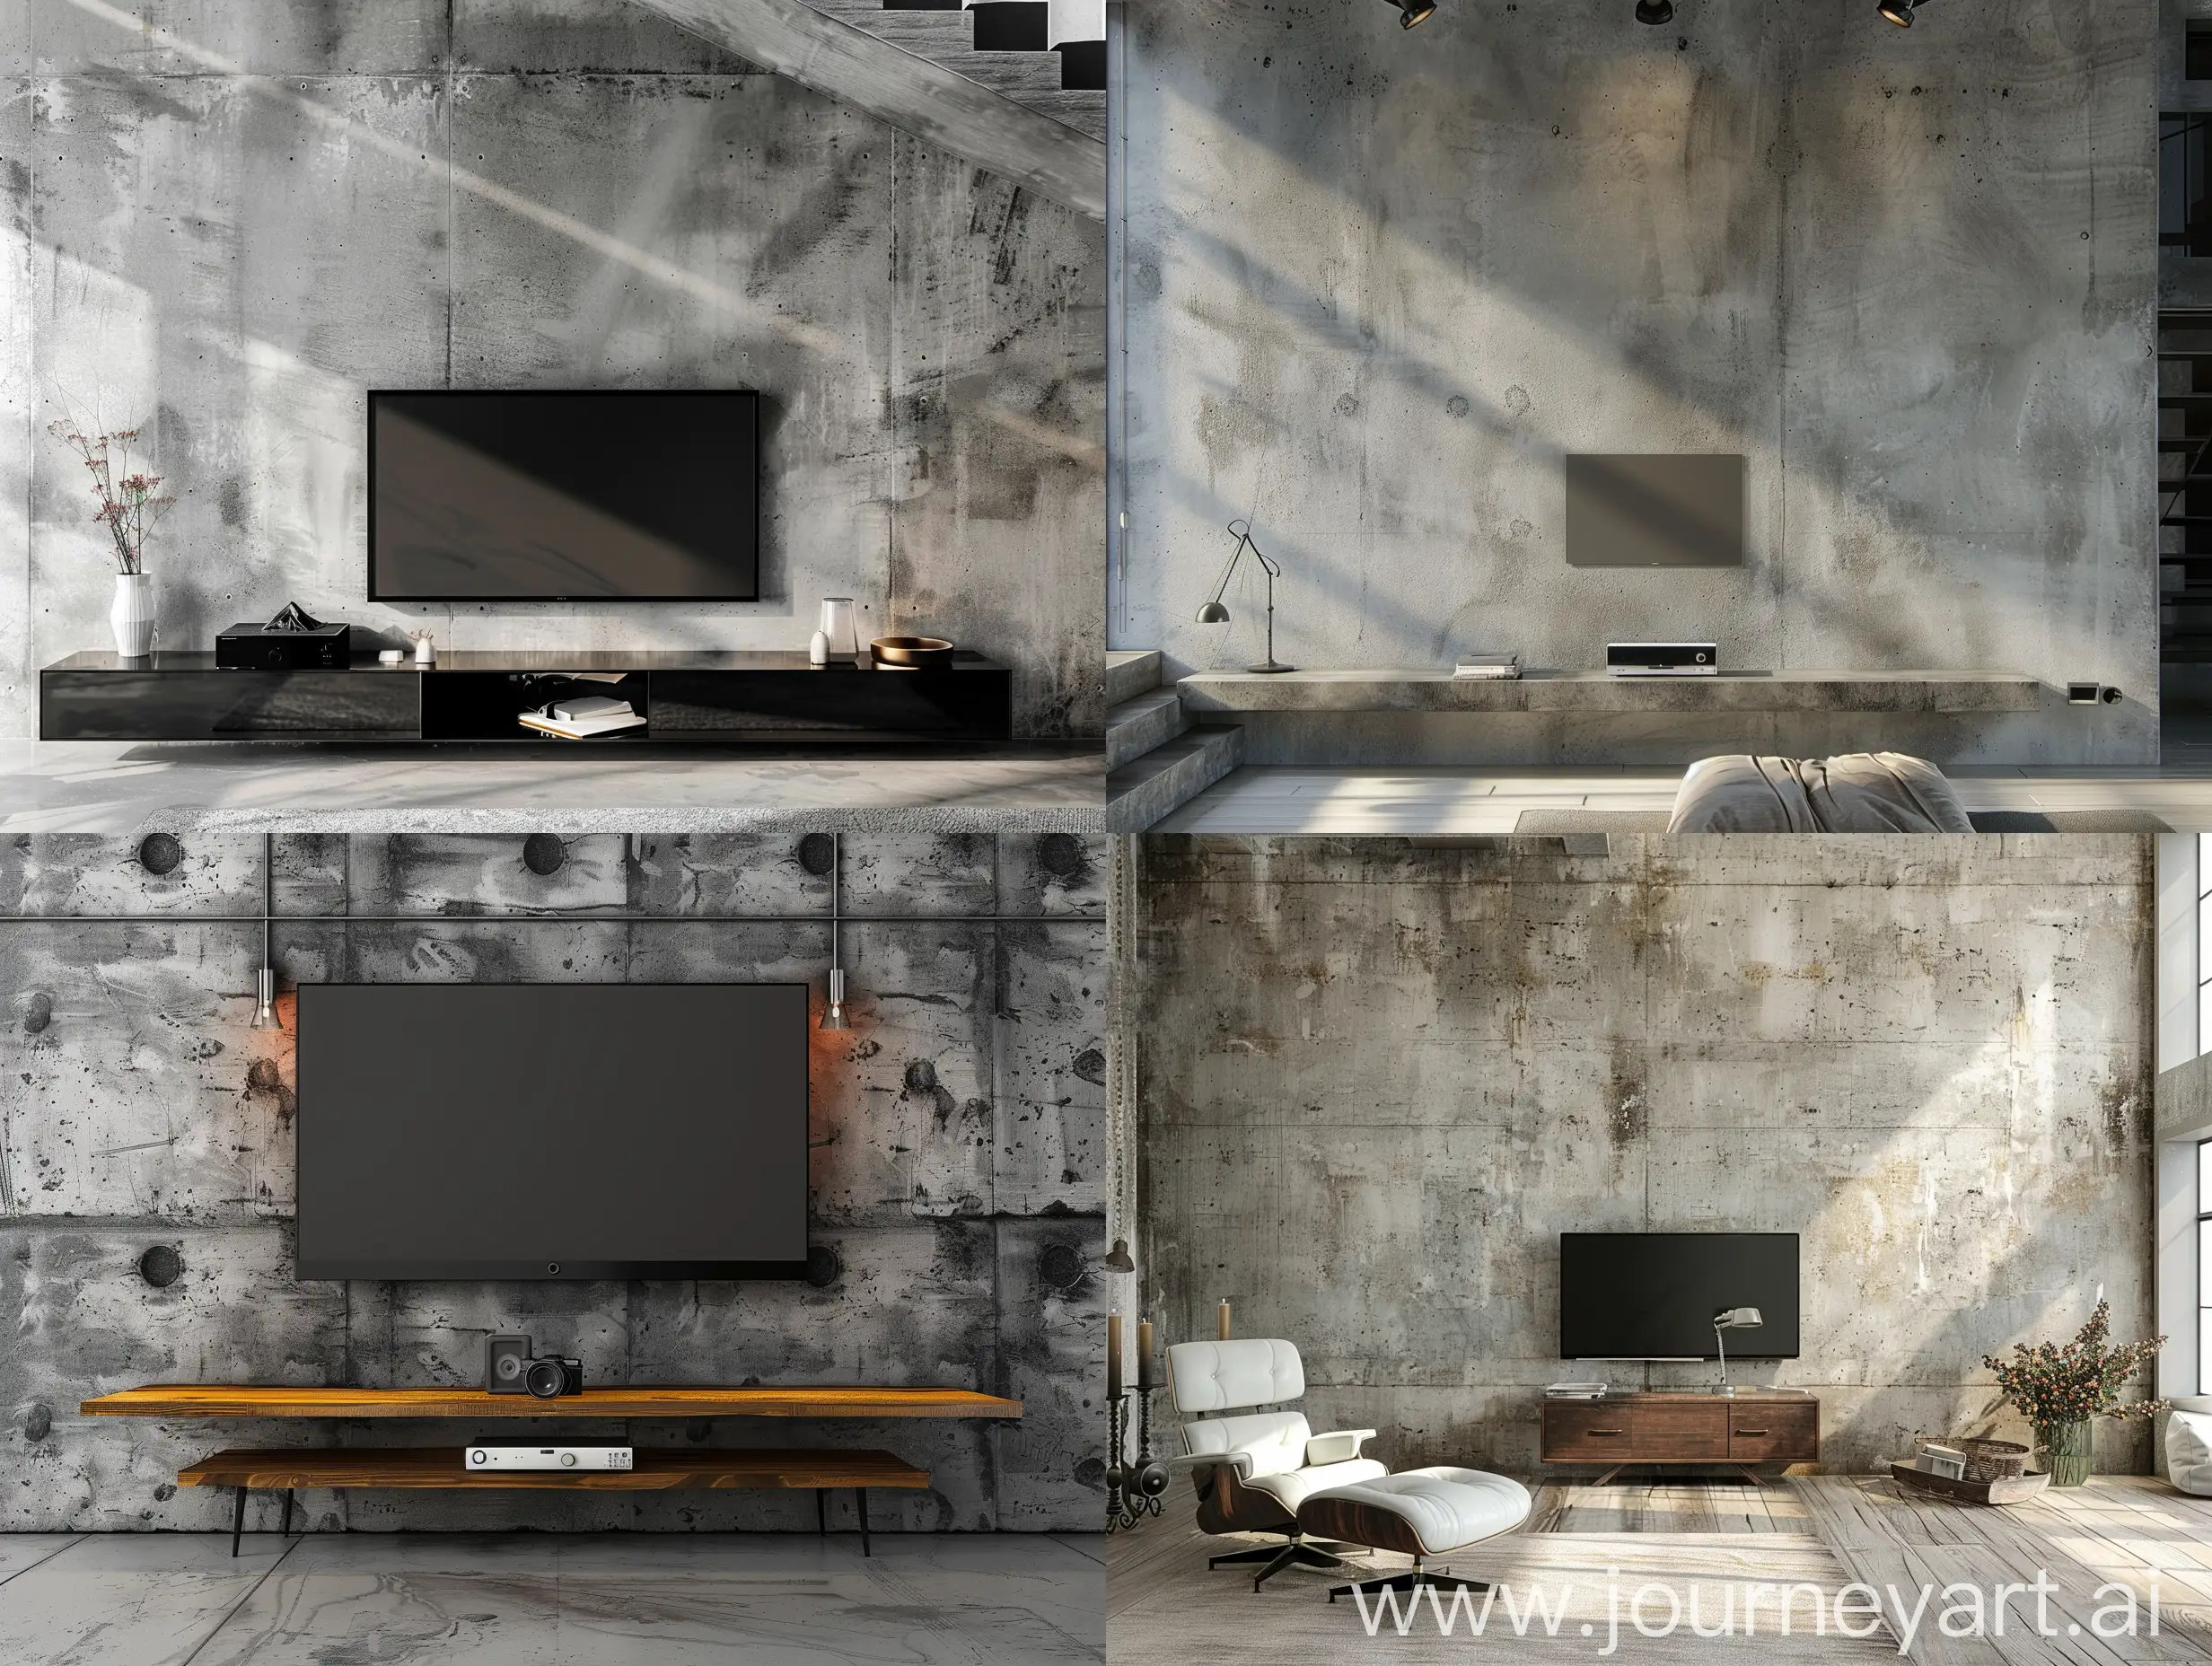 Loft style tv room interior wall mockup on concrete wall